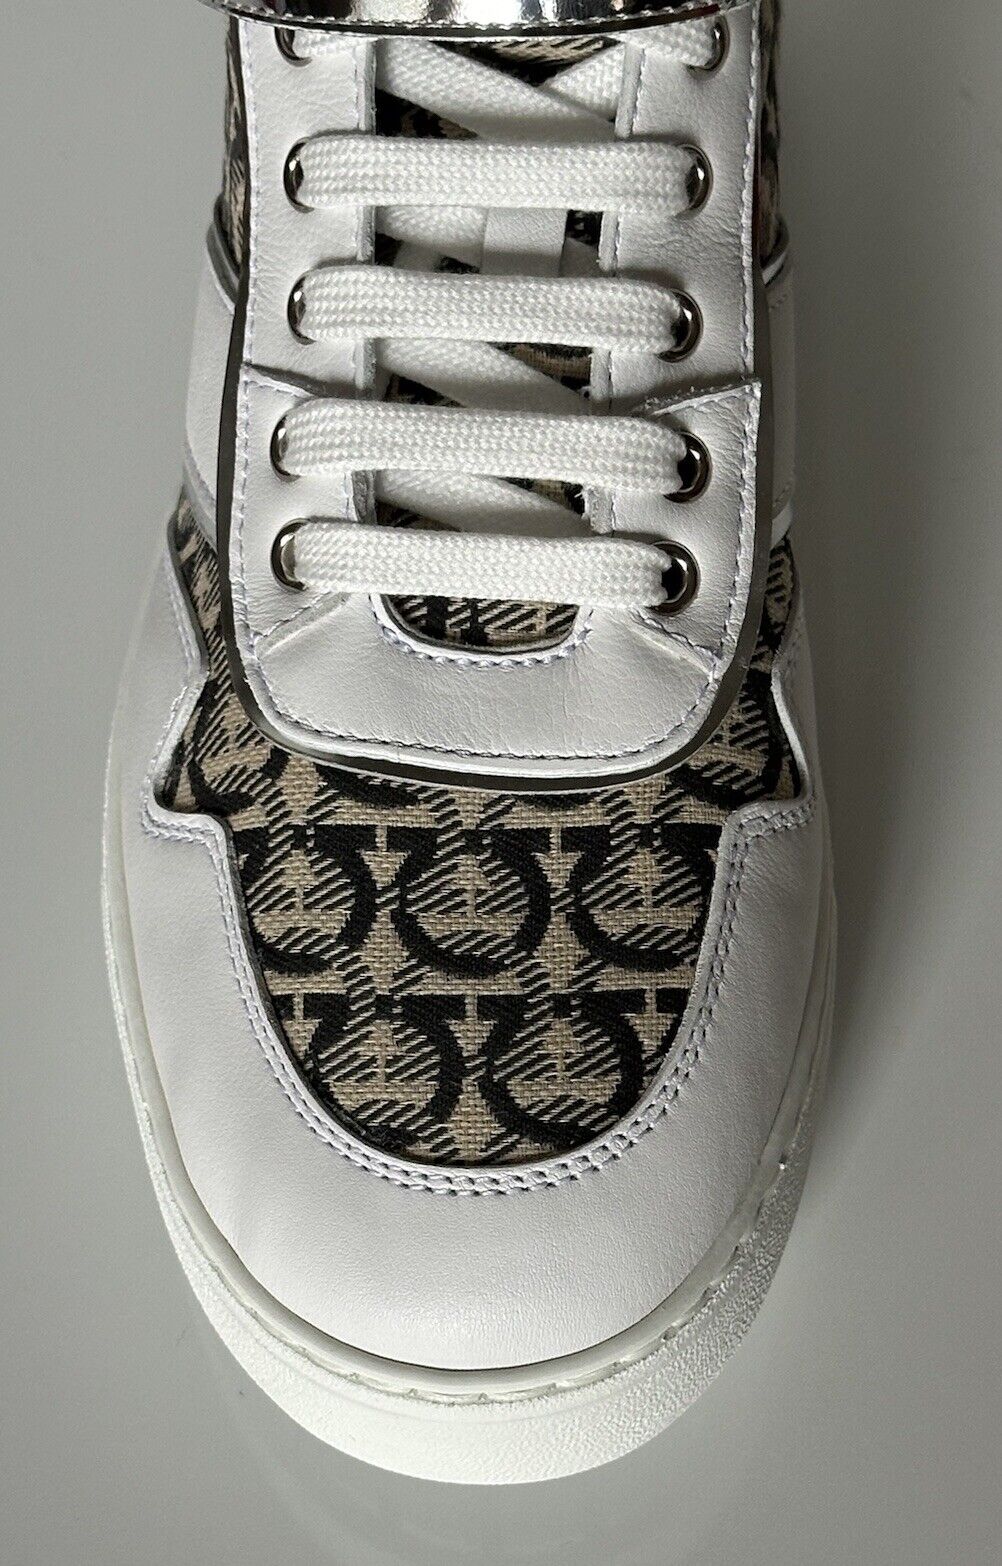 NIB Salvatore Ferragamo High Top Sneakers White/Beige Size 11 US 0751247 Italy